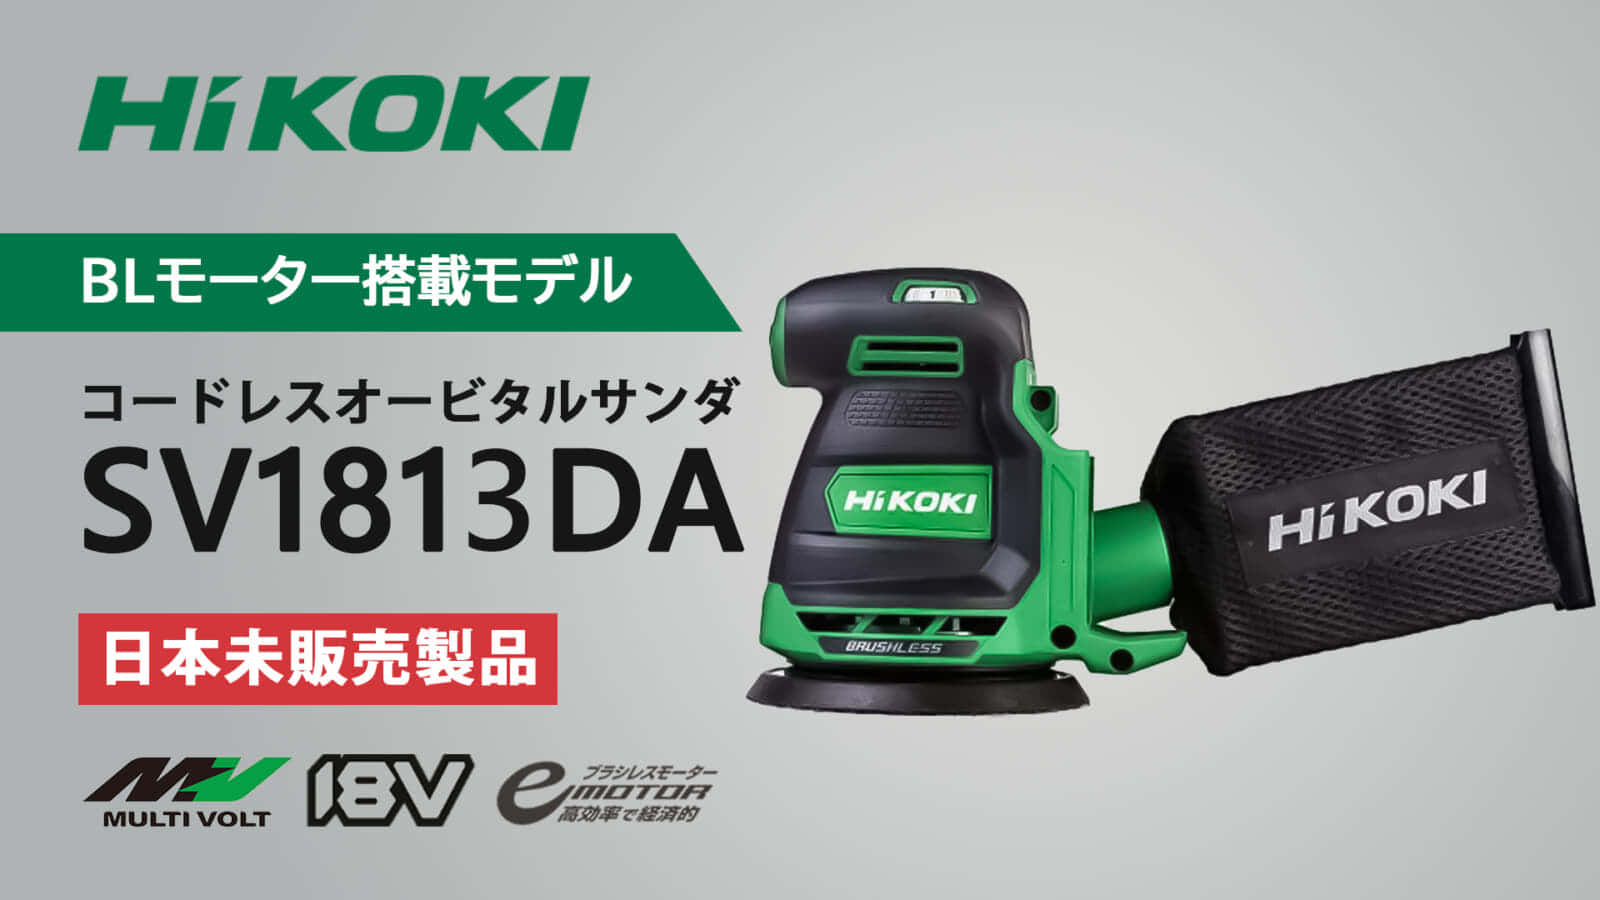 HiKOKI SV1813DA コードレスランダムオービタルサンダを発売、ブラシレスモータを搭載